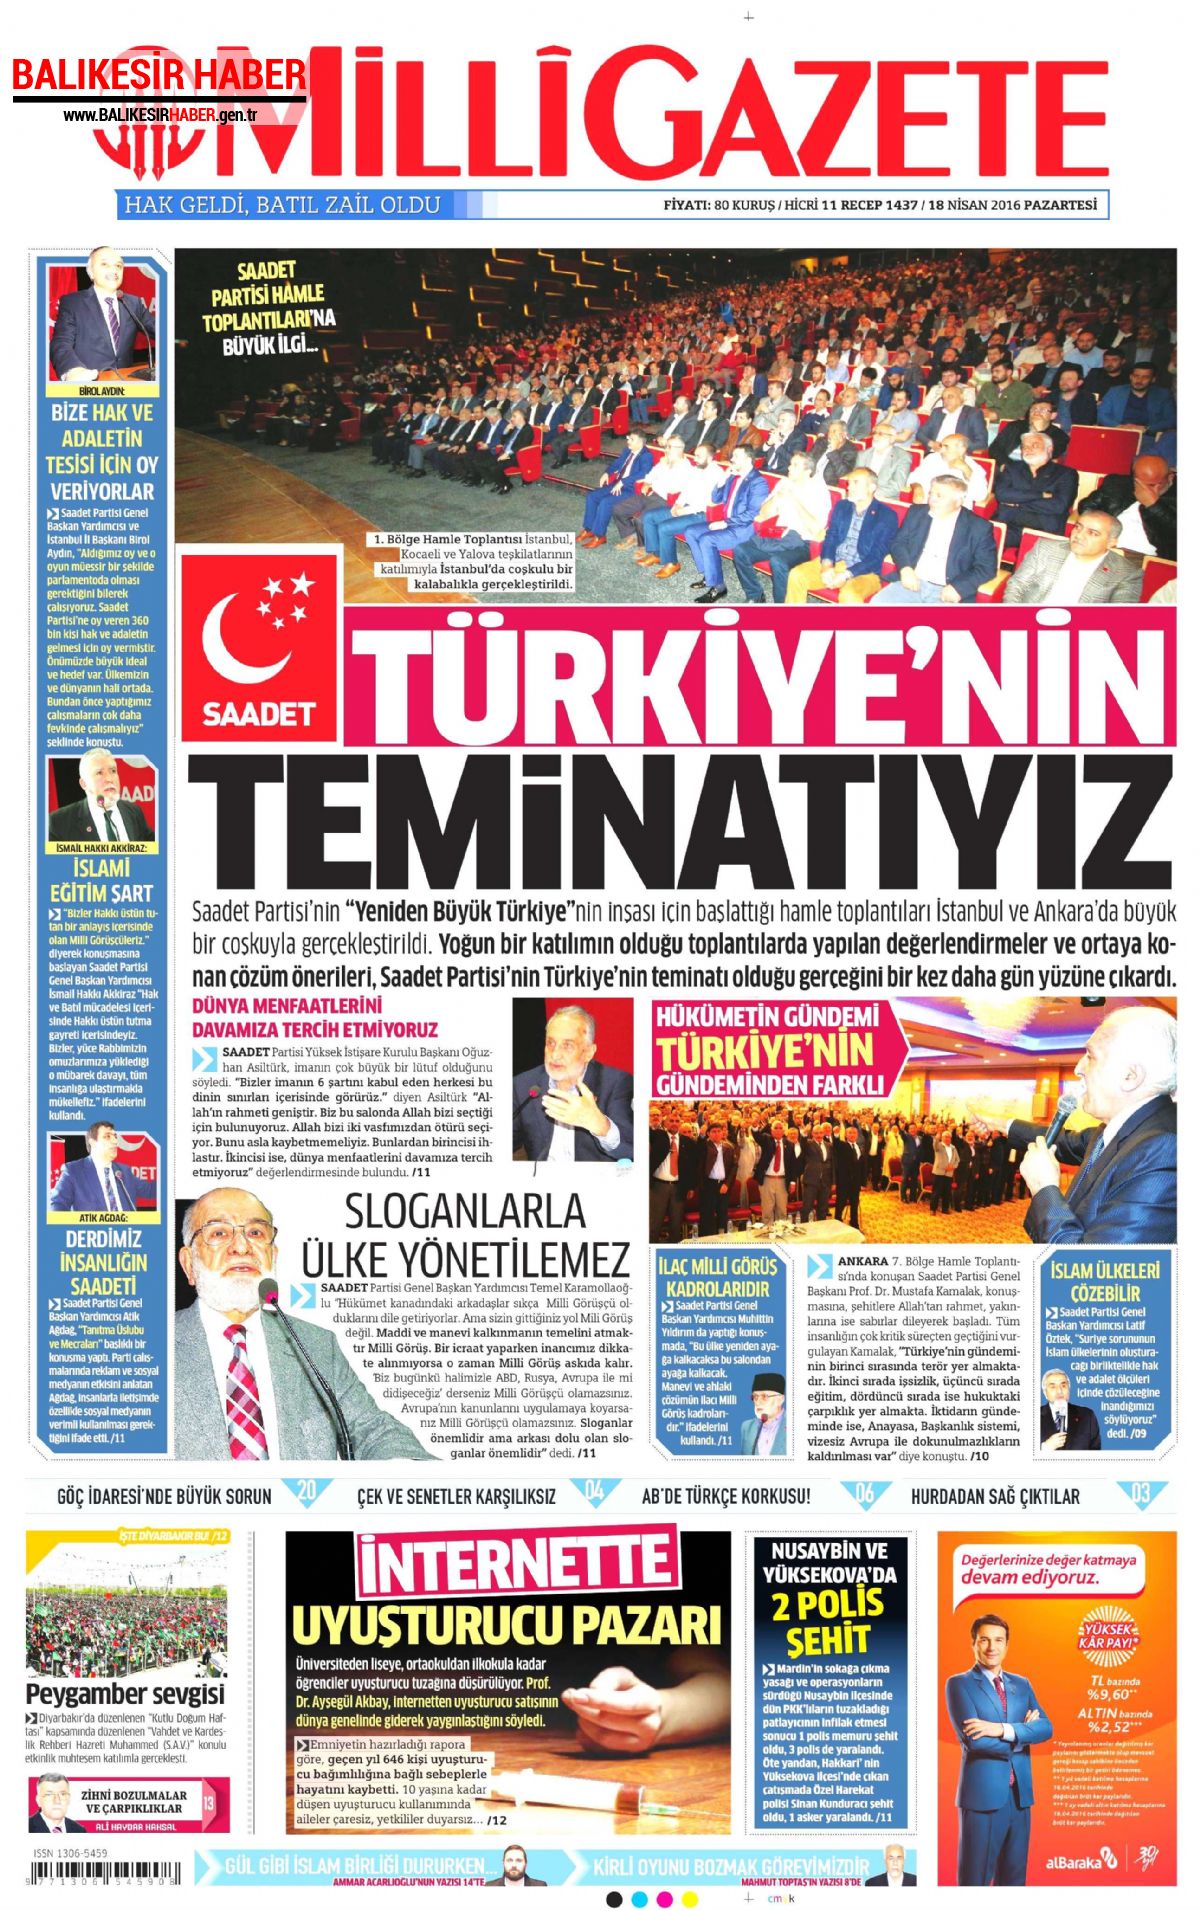 Milli Gazete Gazetesi 18 Nisan 2016 Gazete Manşetleri